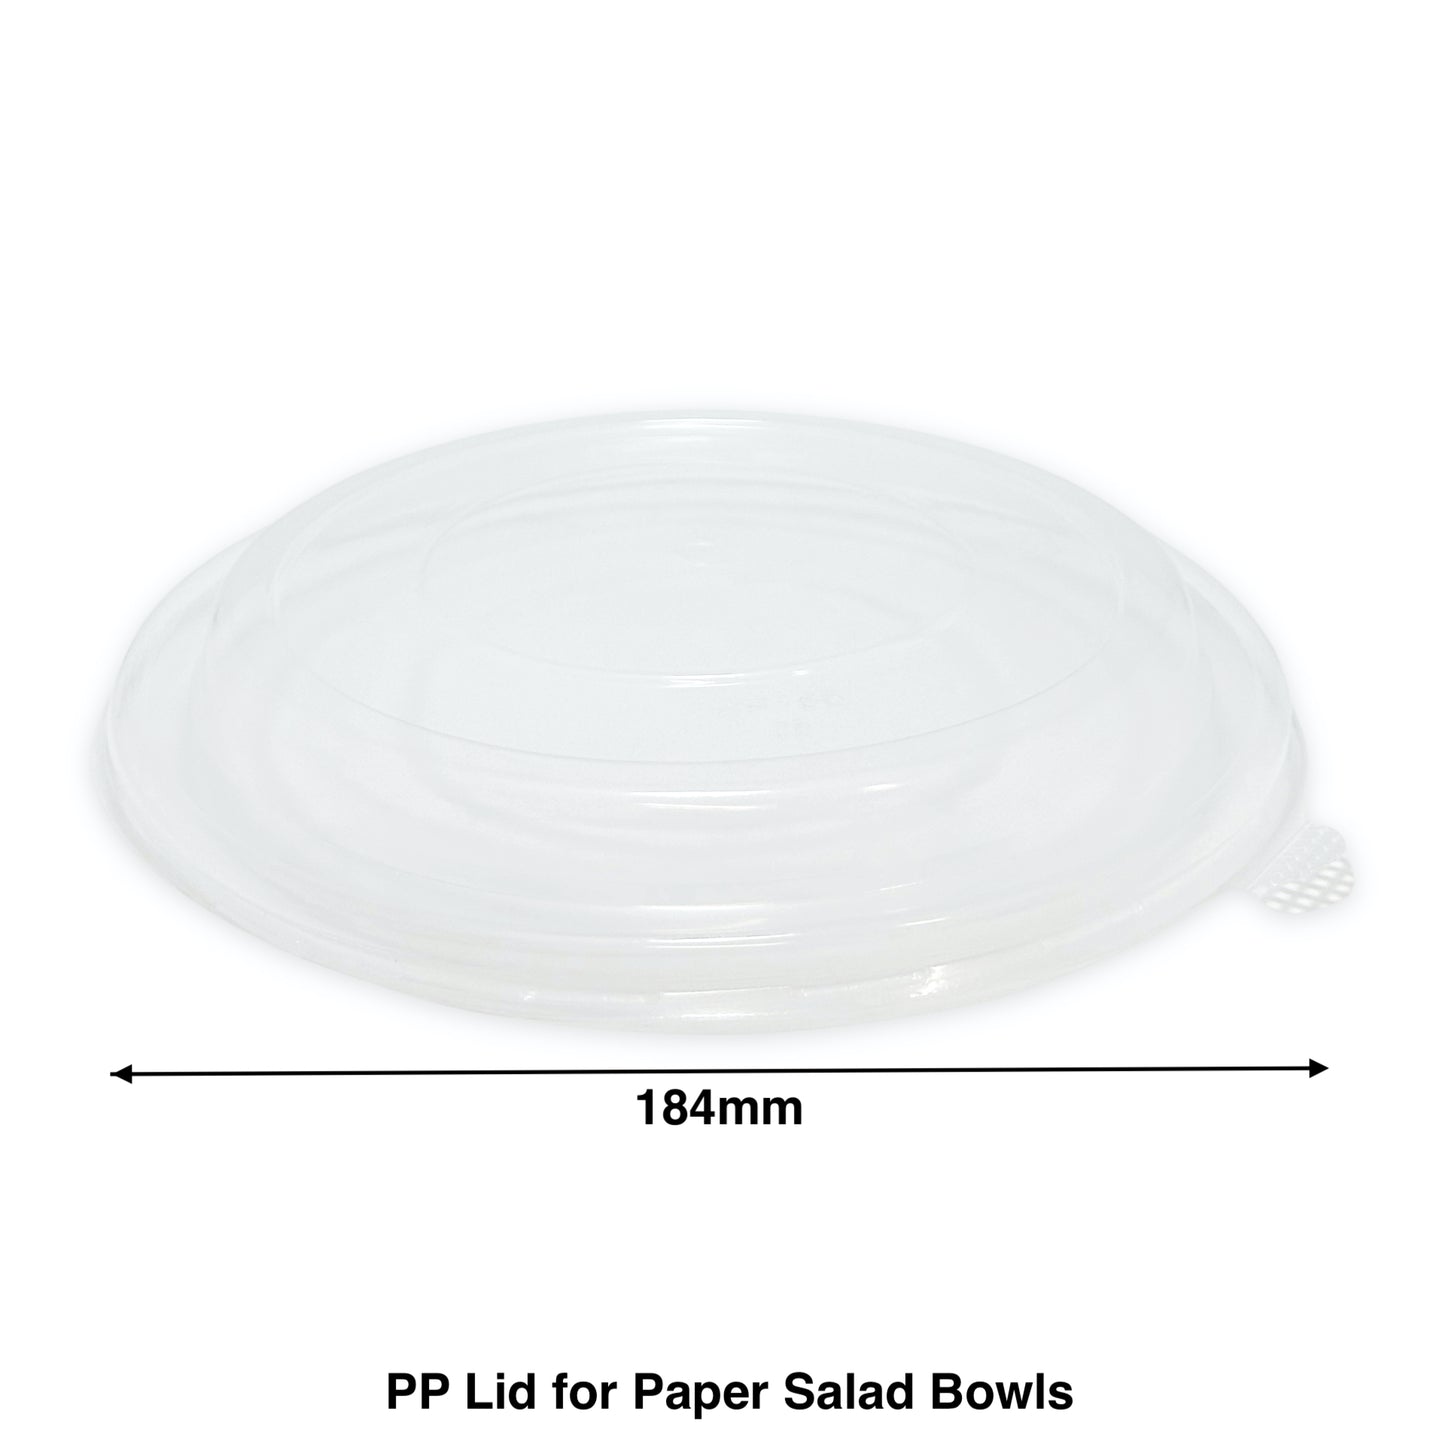 KIS-PL184G | 184mm PP Lids for 37oz-44oz Paper Salad Bowl; From $0.15/pc